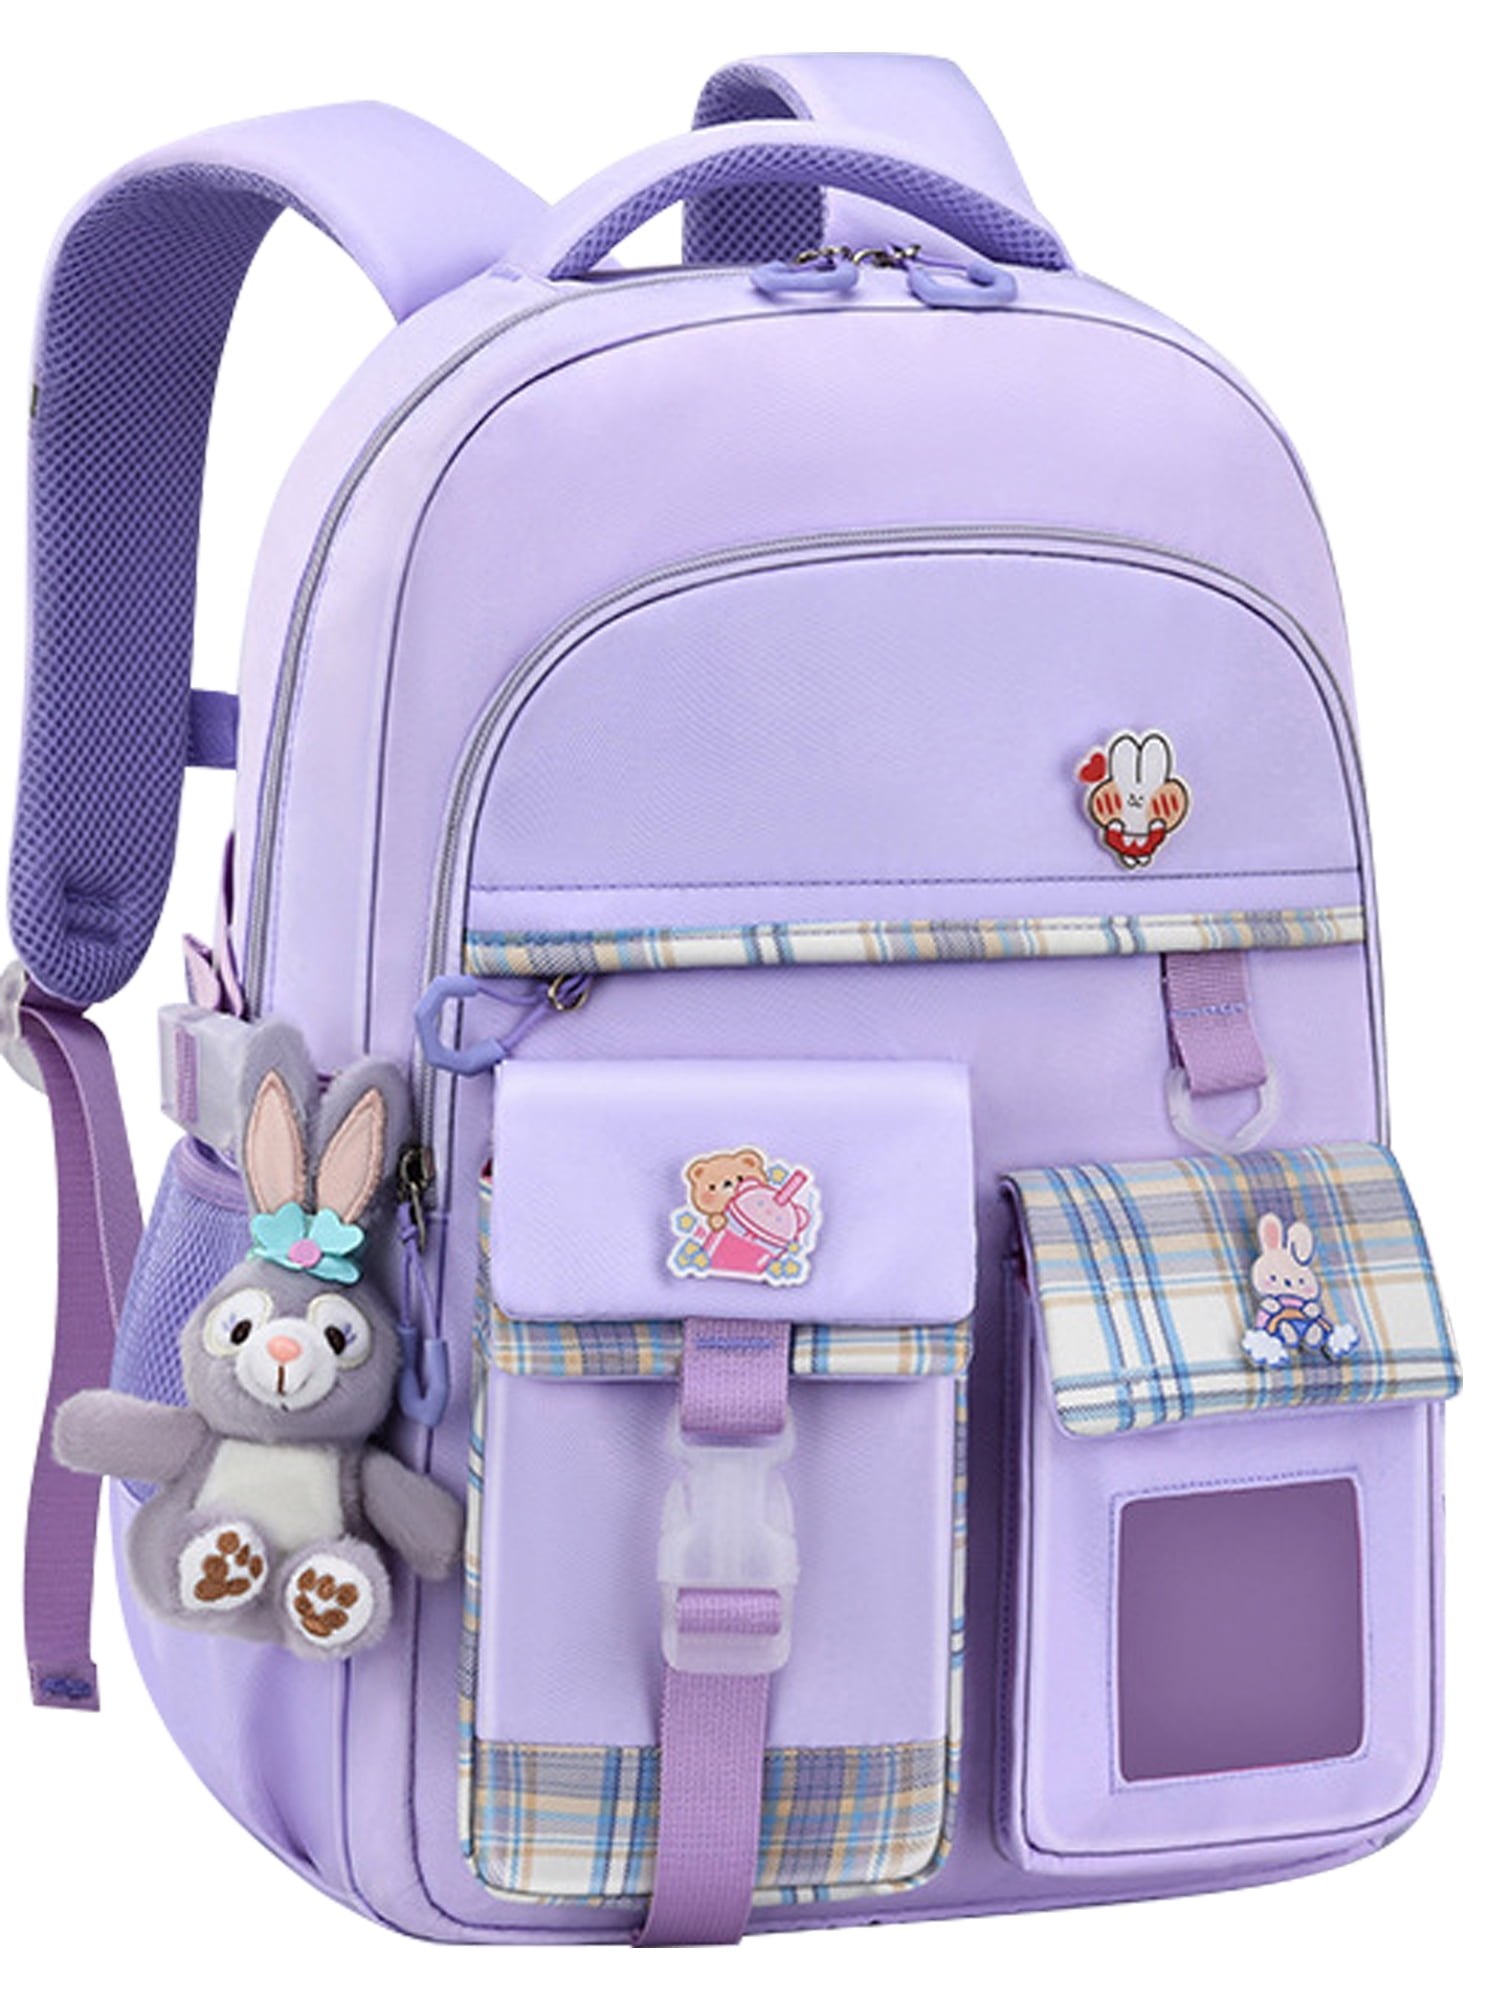 Aursear School Backpacks for Girls, Kids School Bags Girls Bookbag ...